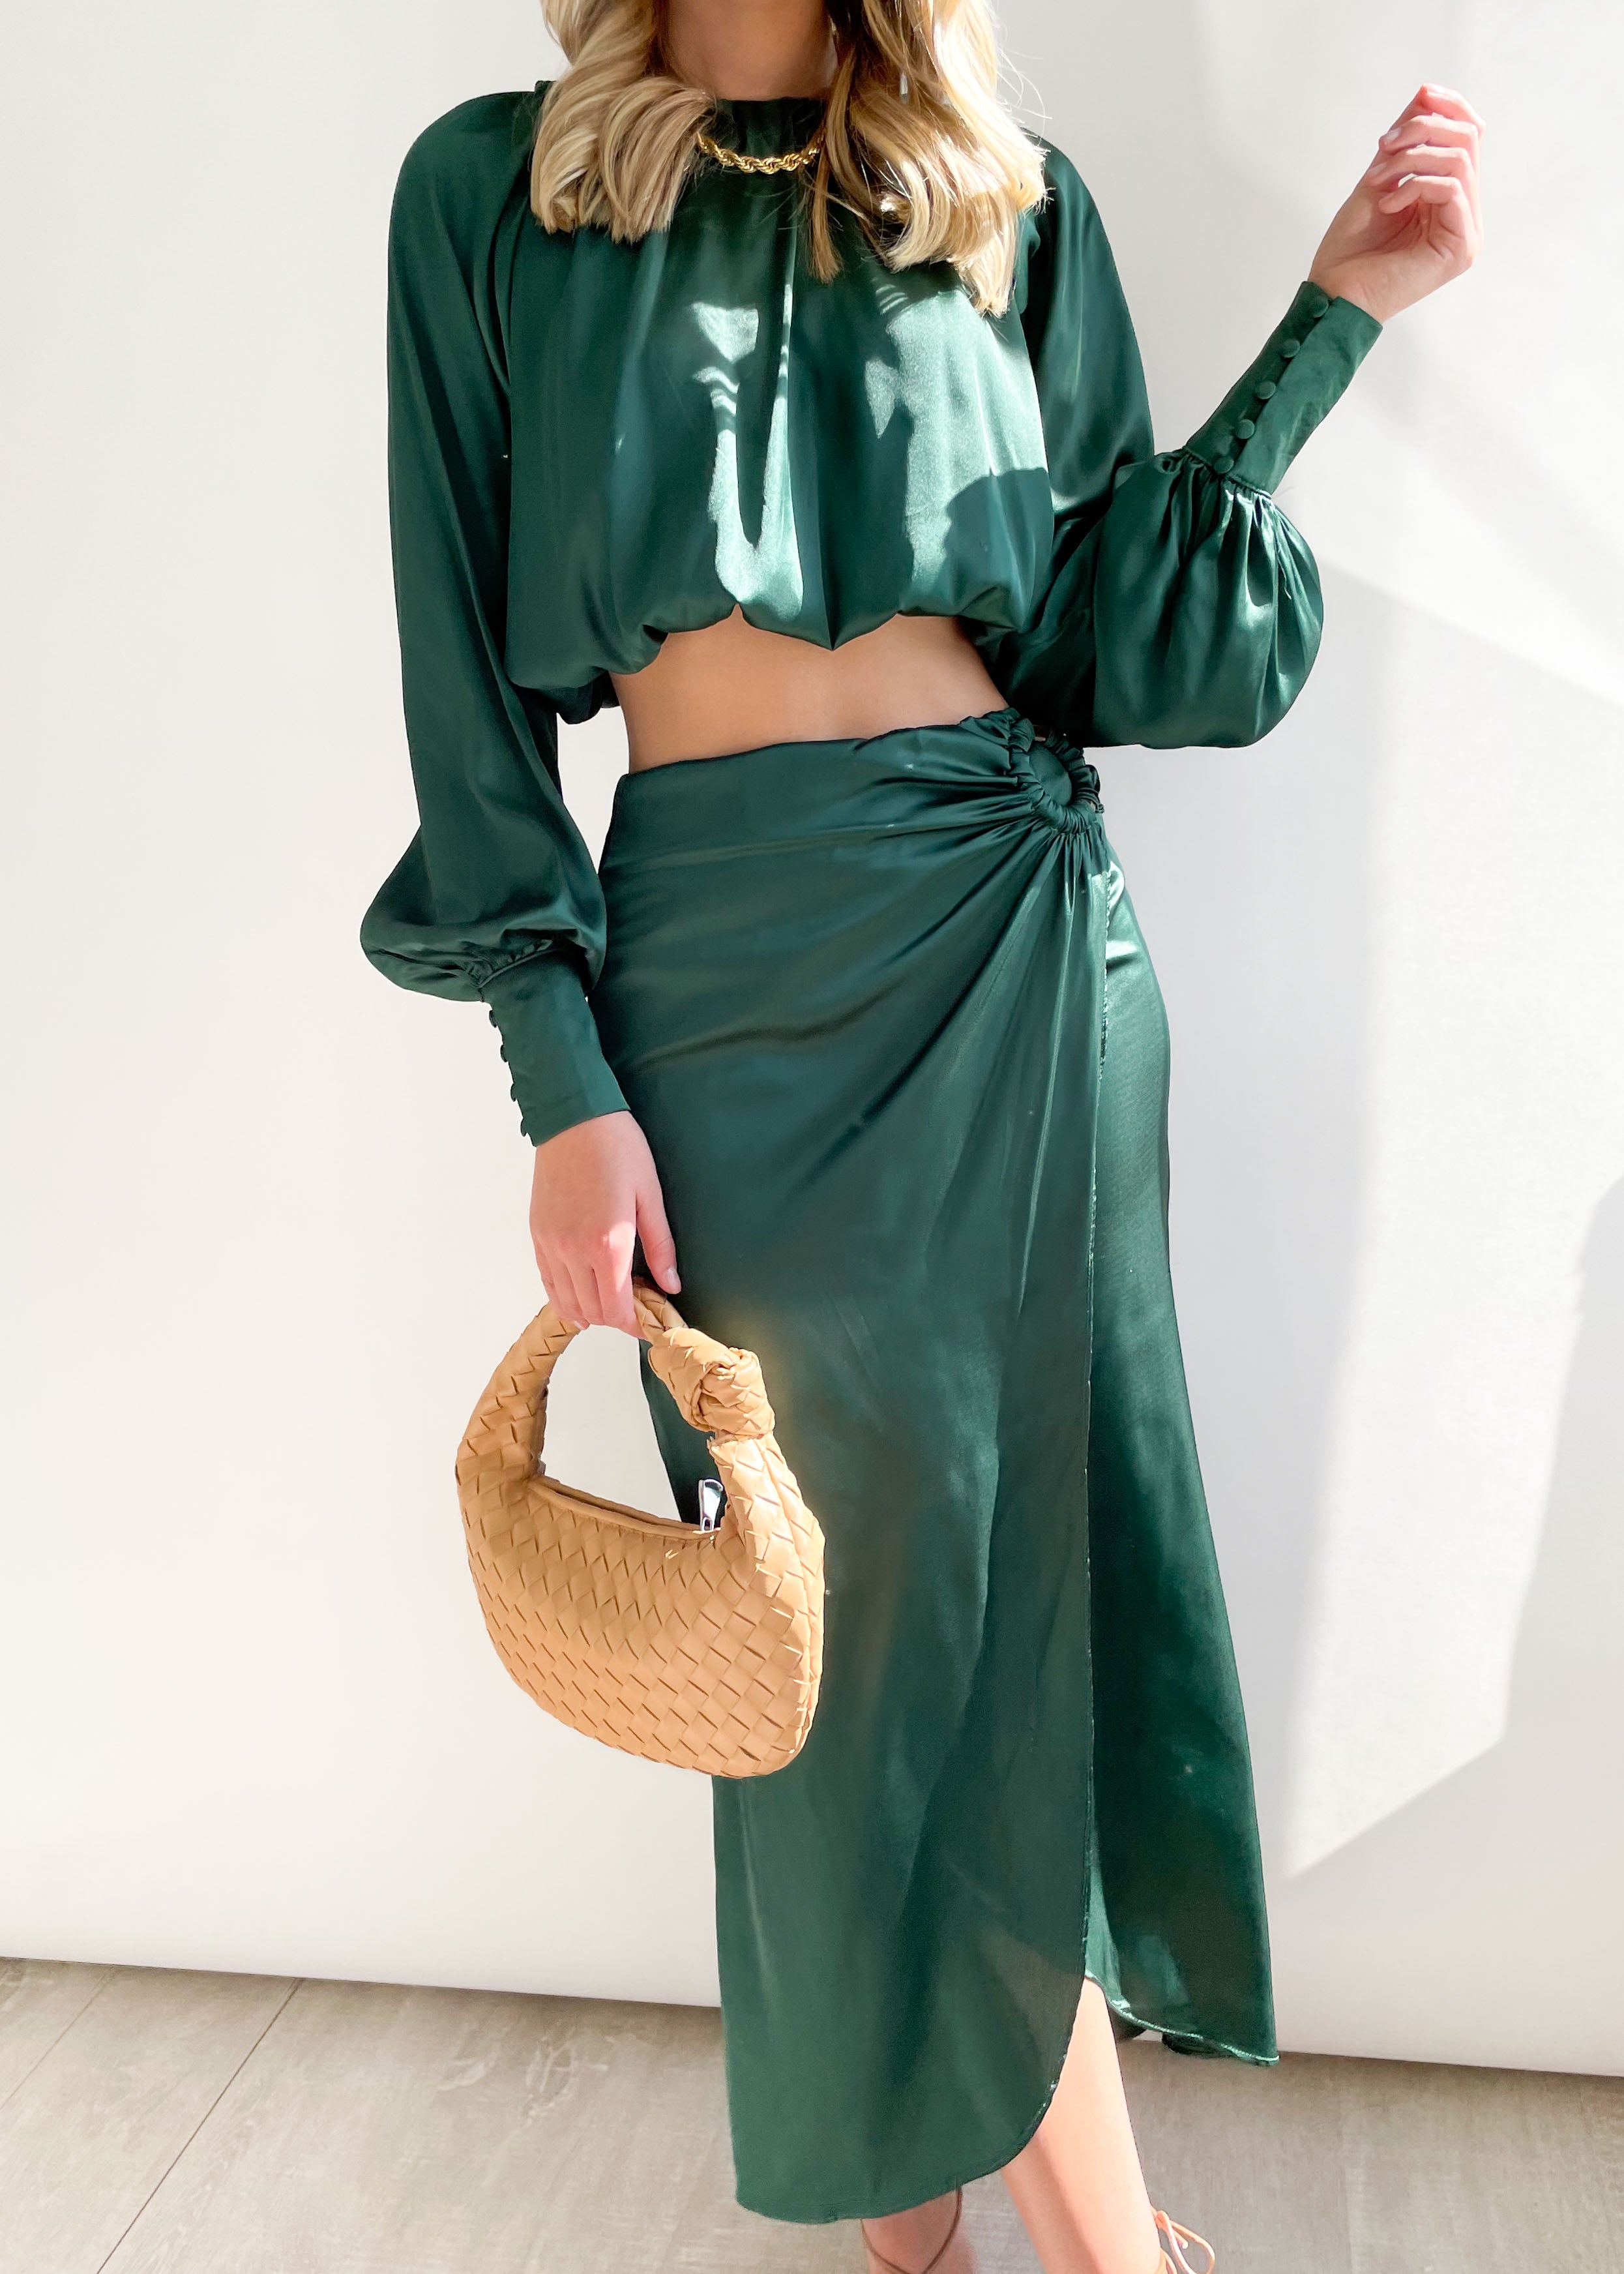 Jilia Set - Emerald